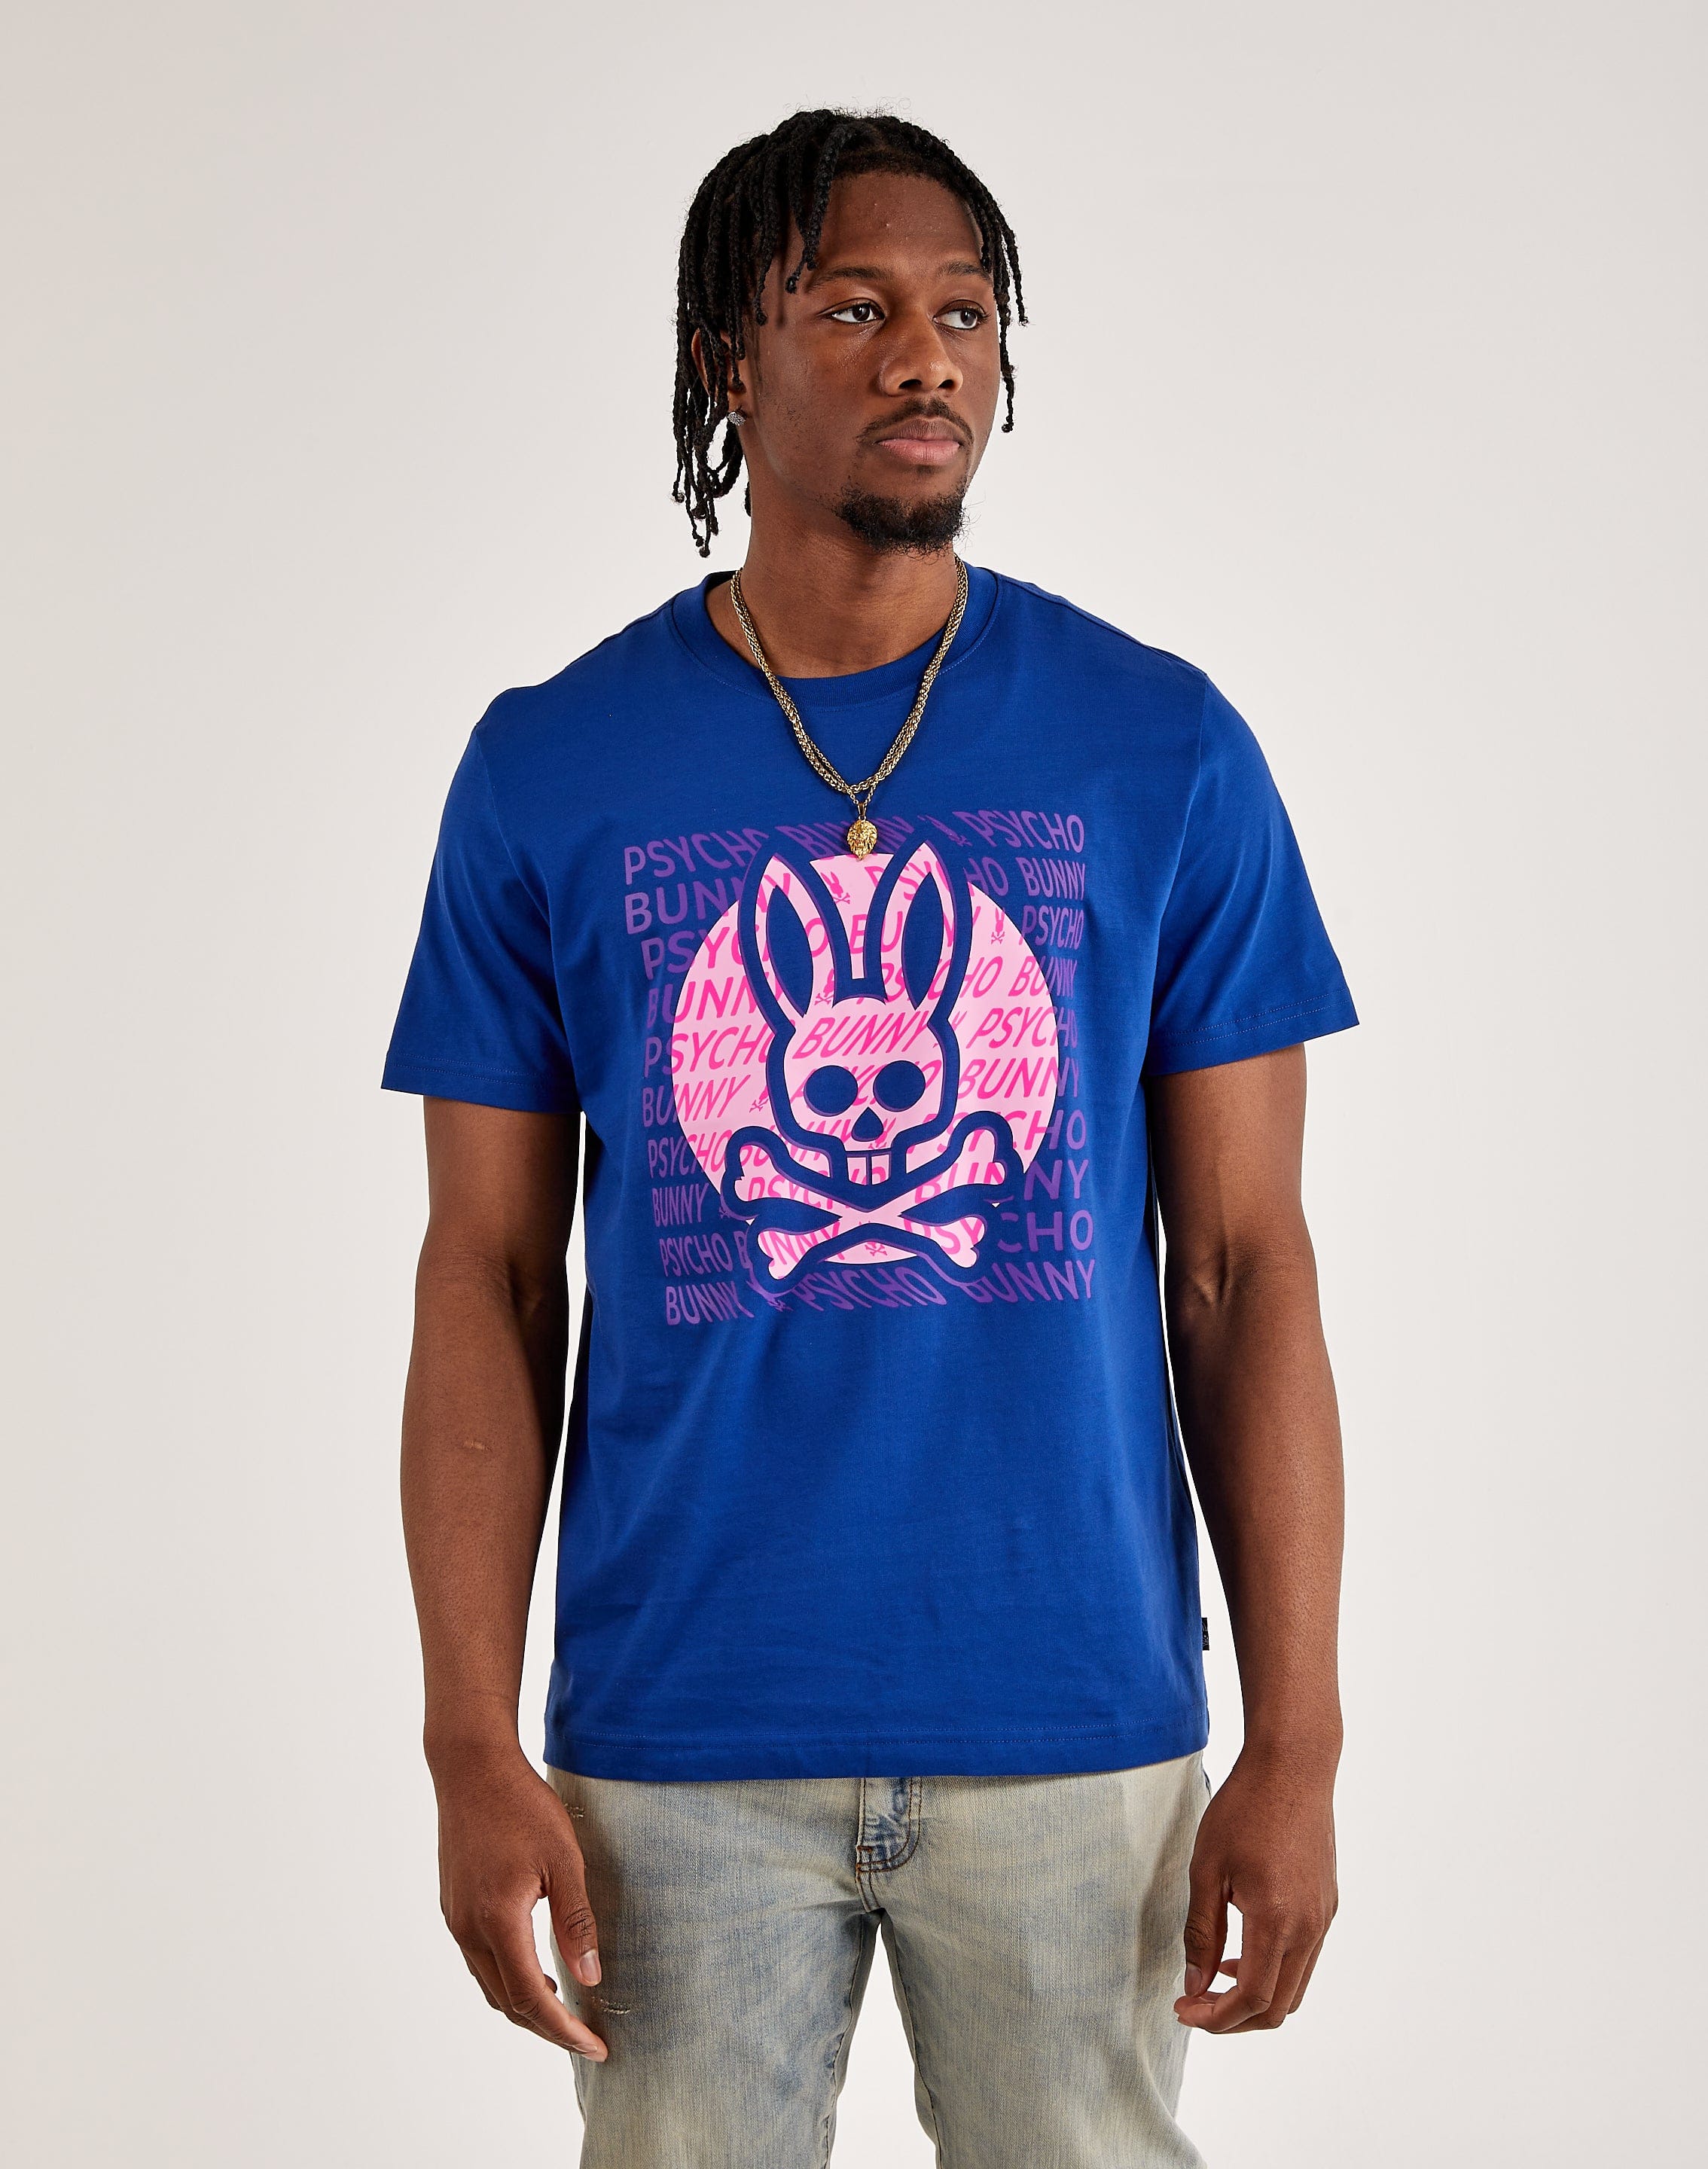 Men's Sale Shorts at Psycho Bunny - Exclusive Discounts